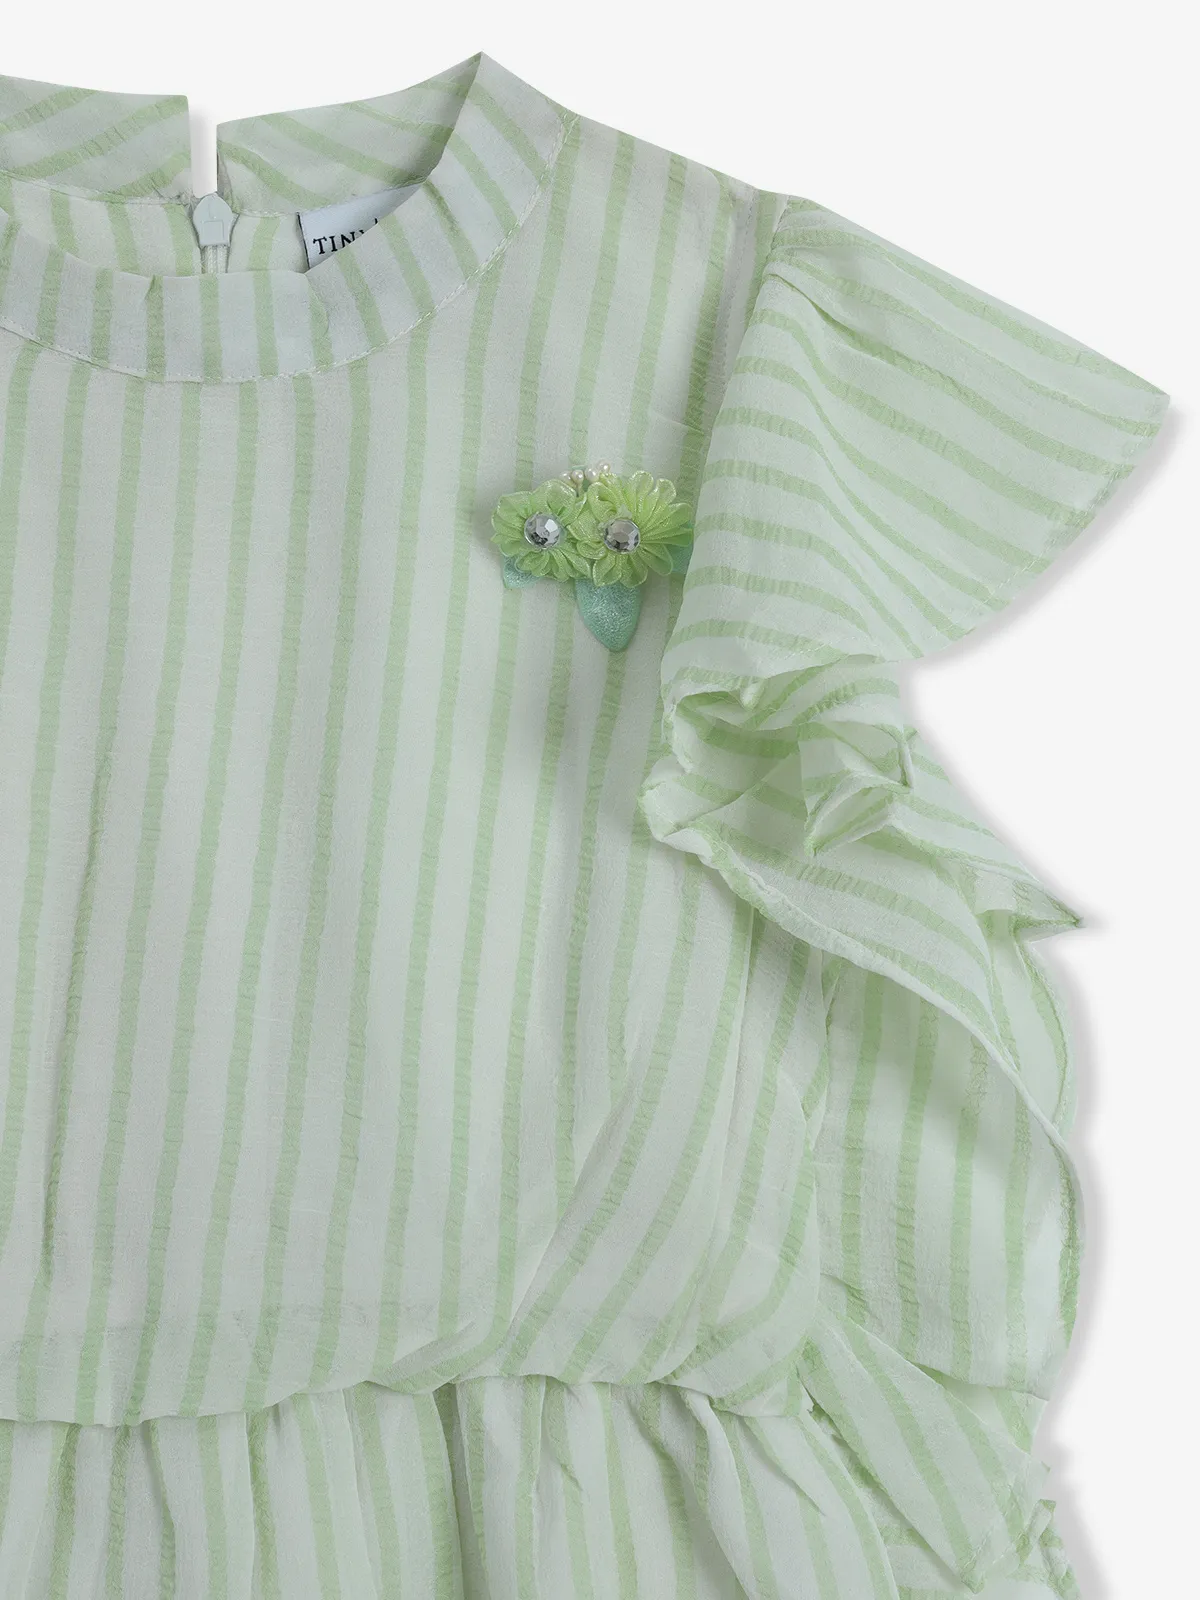 TINY GIRL pista green stripe cotton top